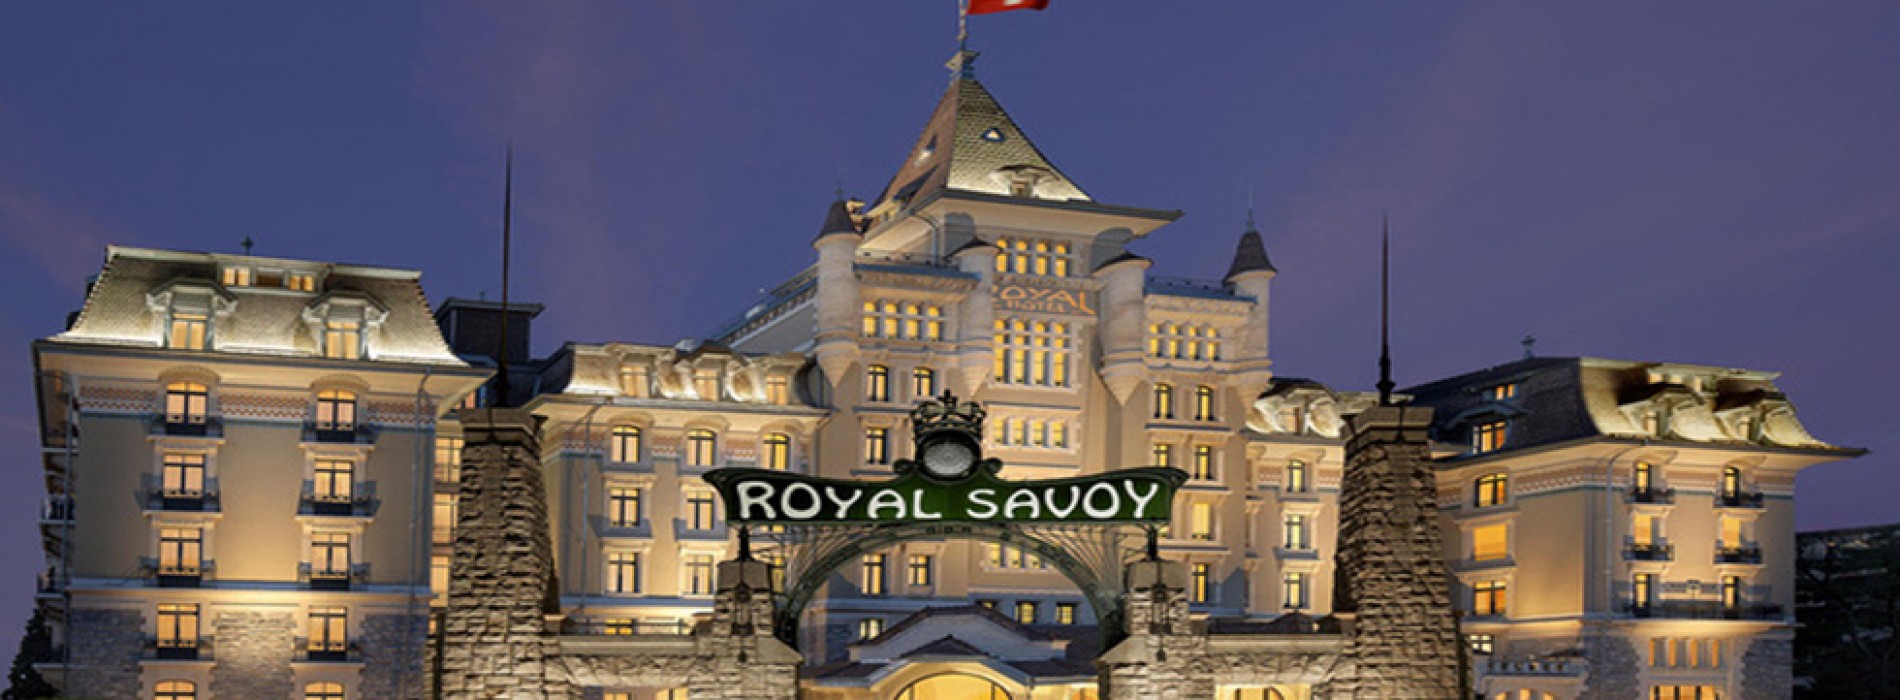 Royal Savoy Hotel & Spa Lausanne celebrates first anniversary